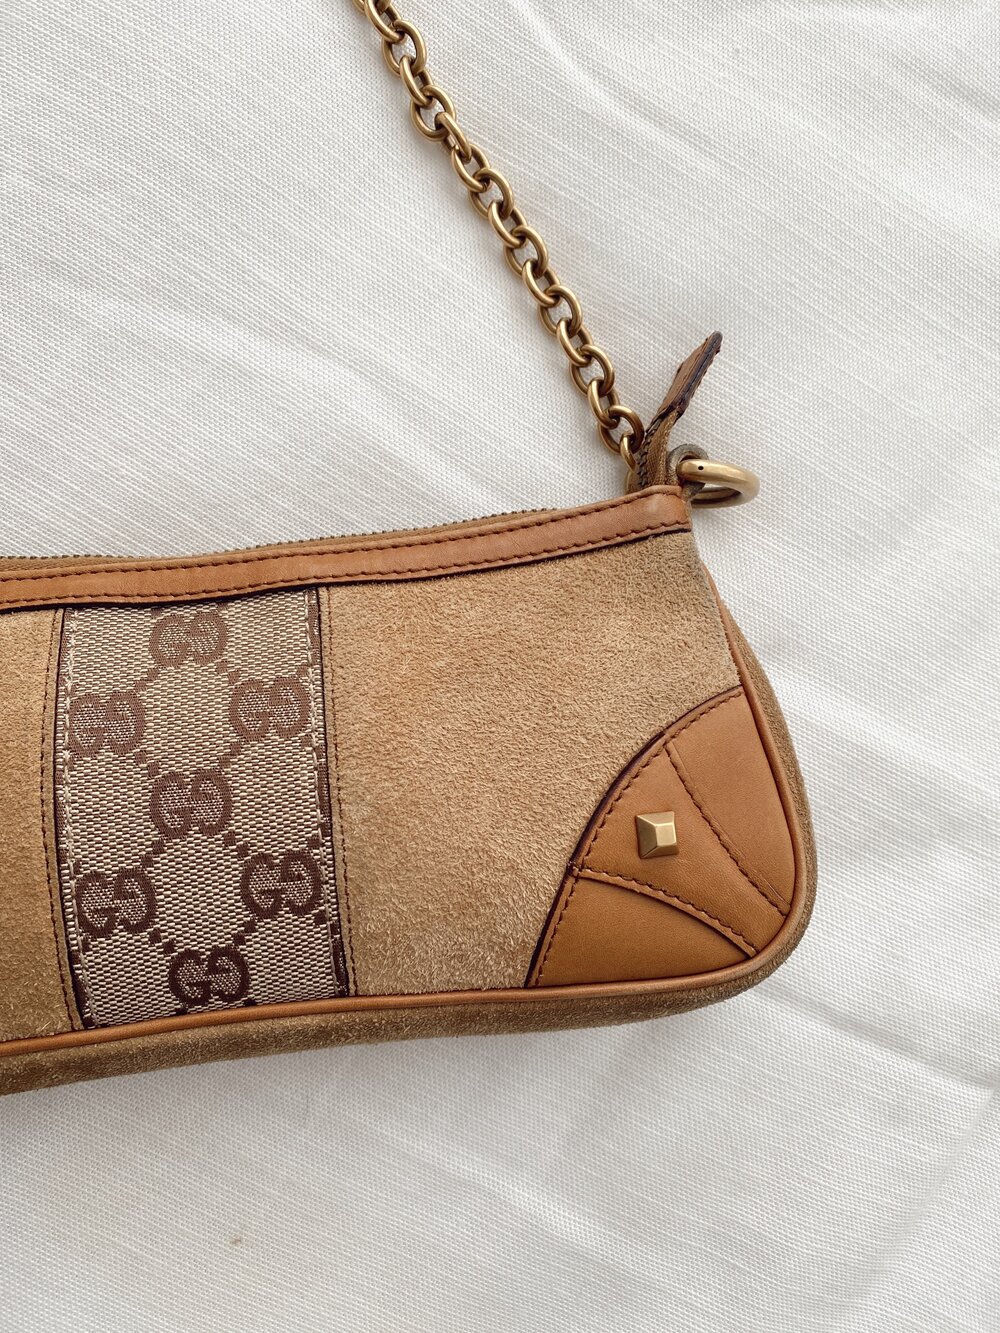 Gucci GG Canvas Nailhead Pochette - ShopStyle Satchels & Top Handle Bags